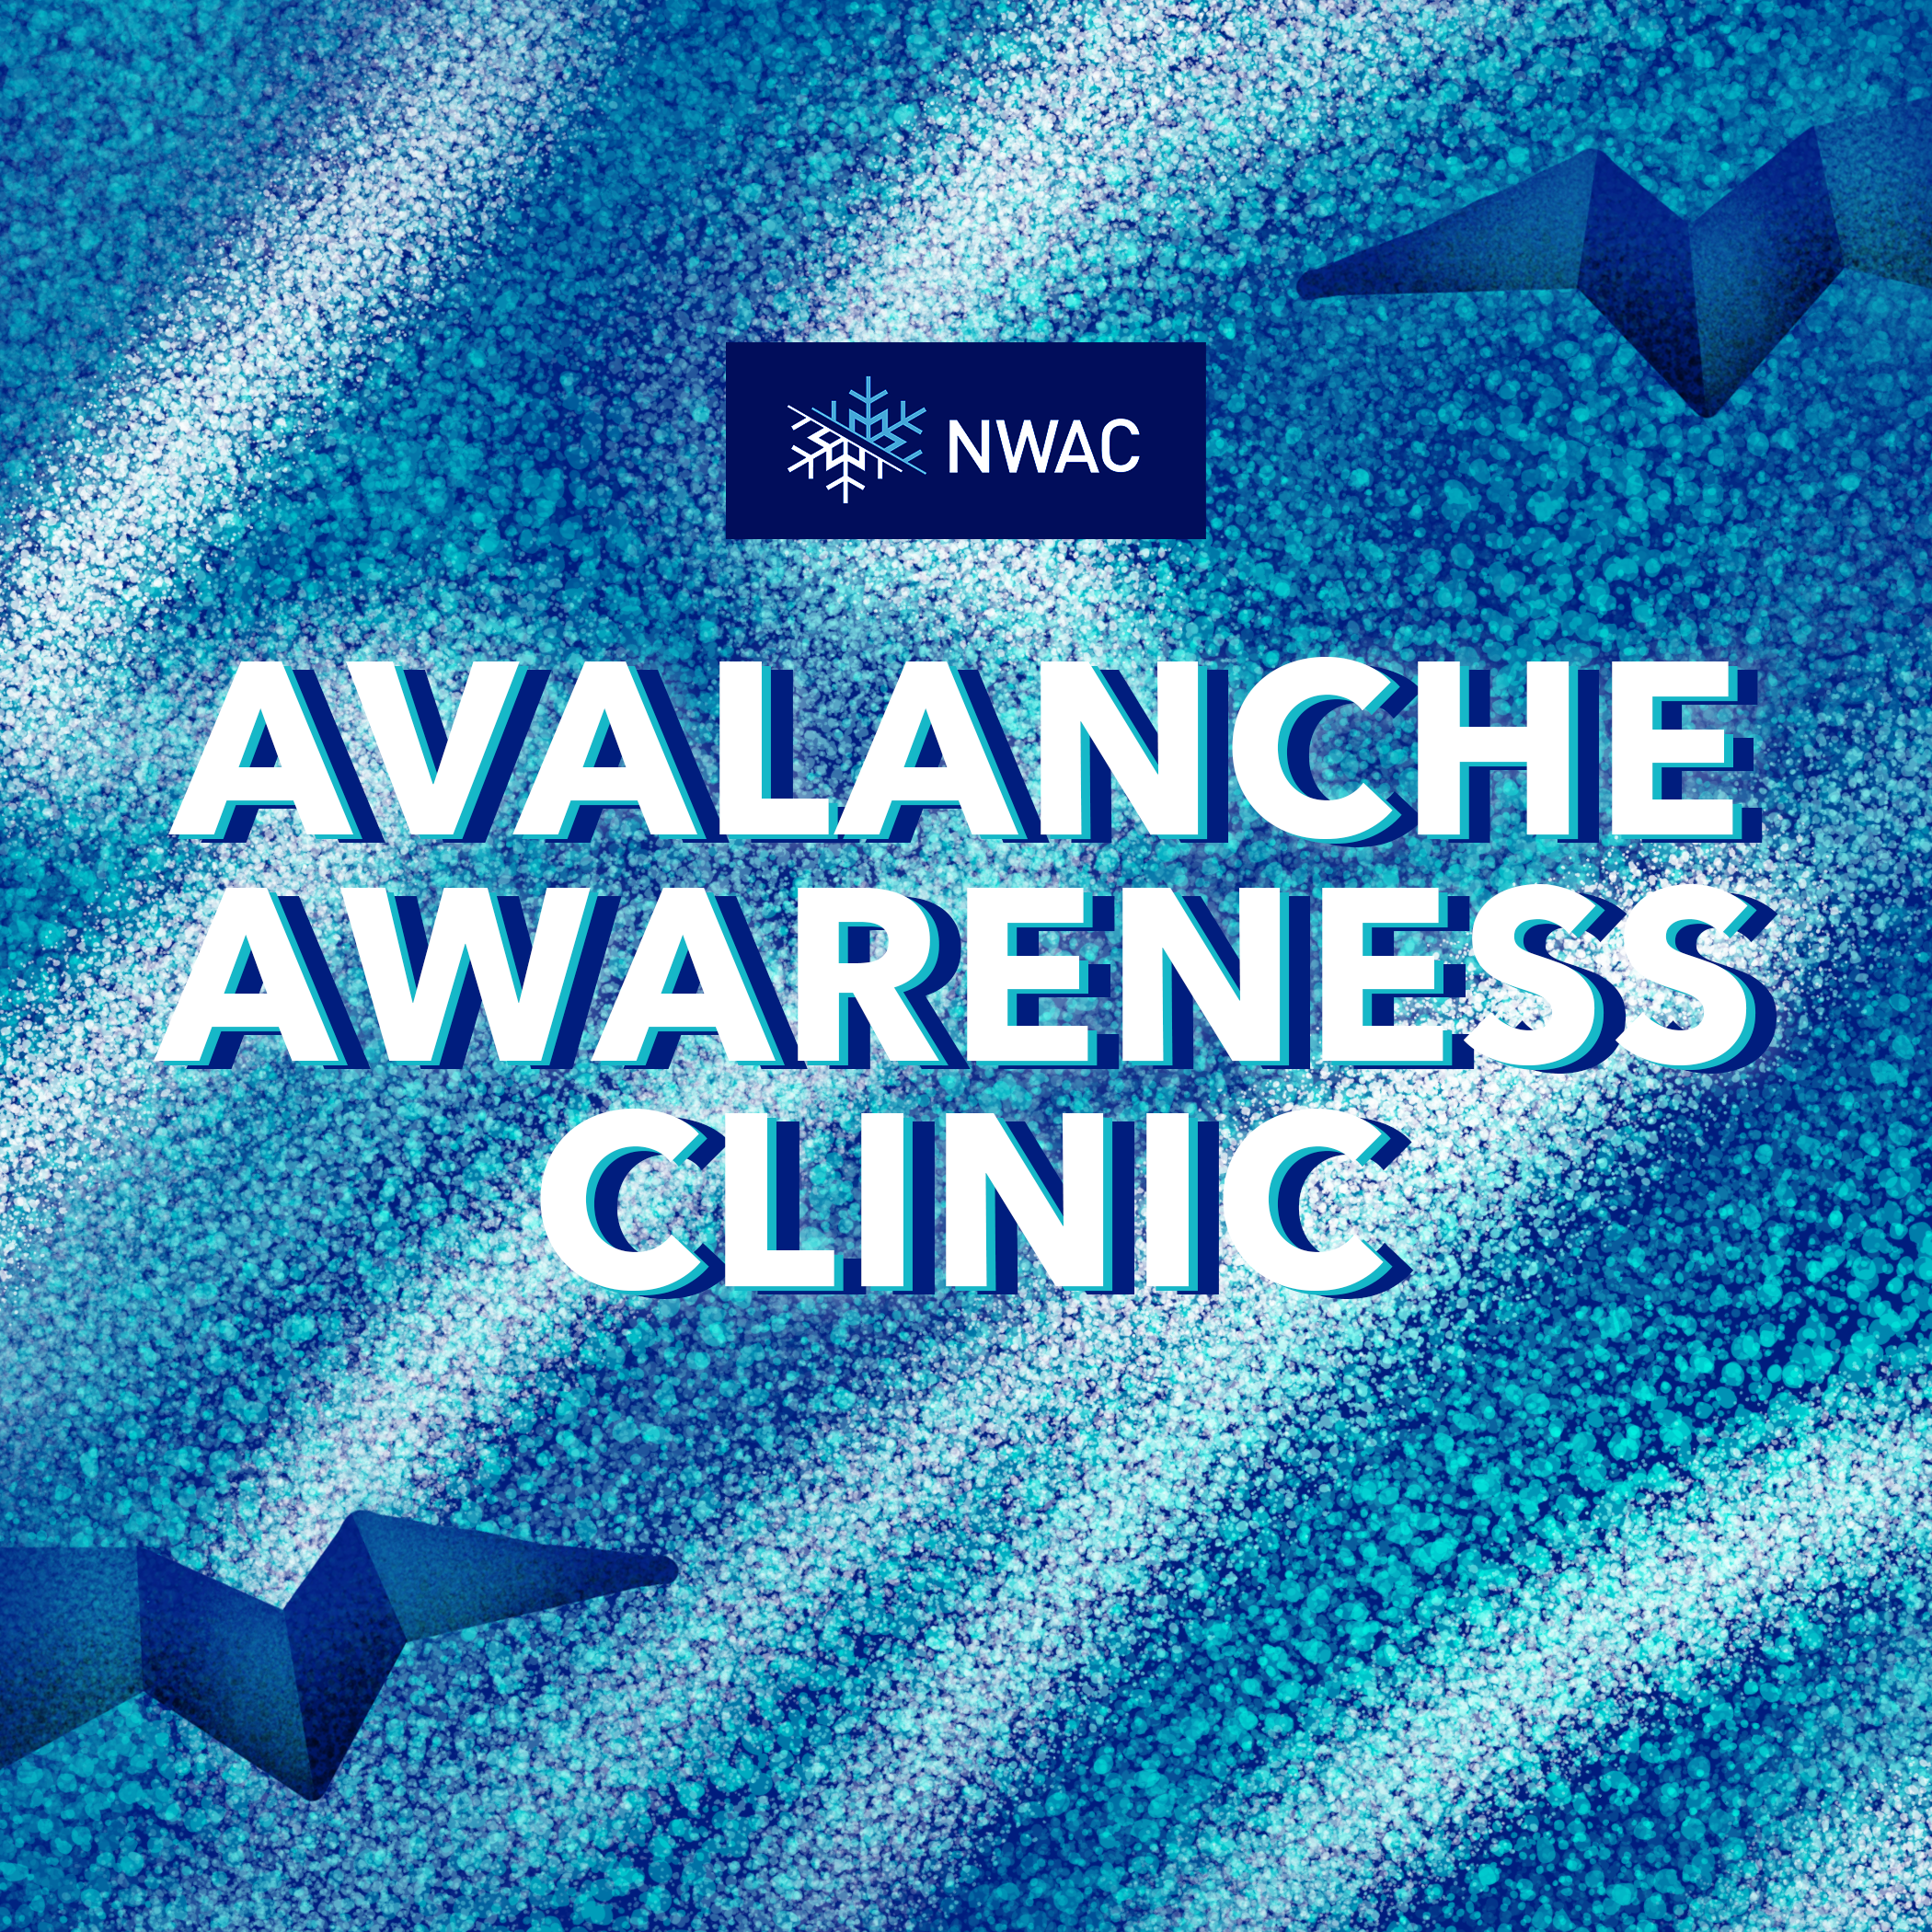 NWAC Avalanche Awareness Clinic | Virtual Presentation